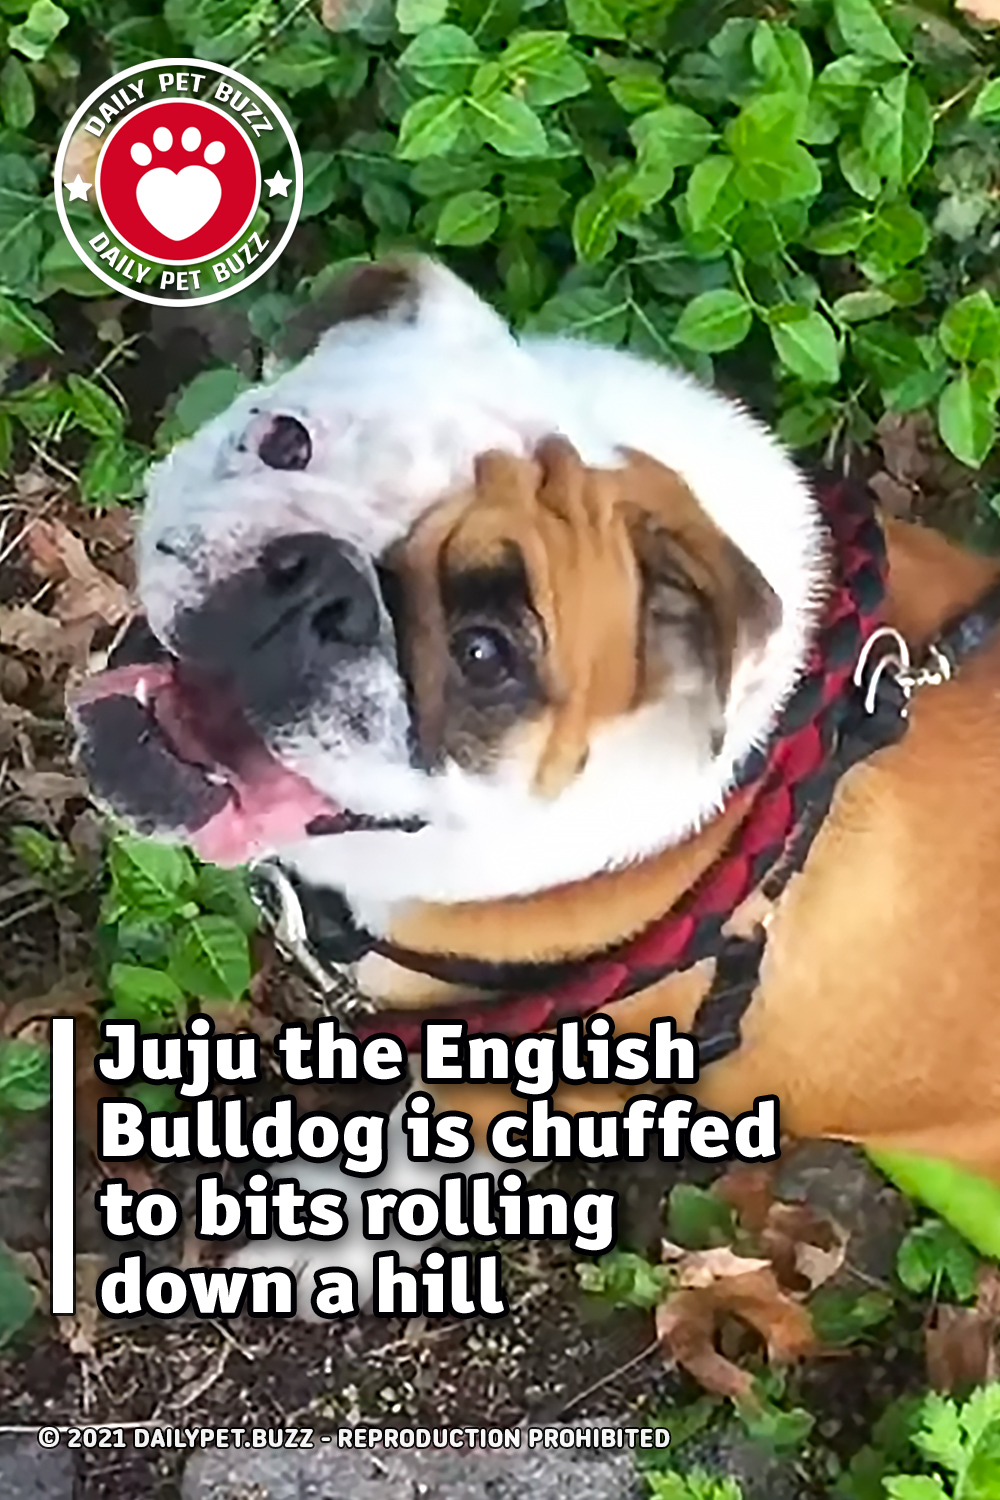 Juju the English Bulldog is chuffed to bits rolling down a hill